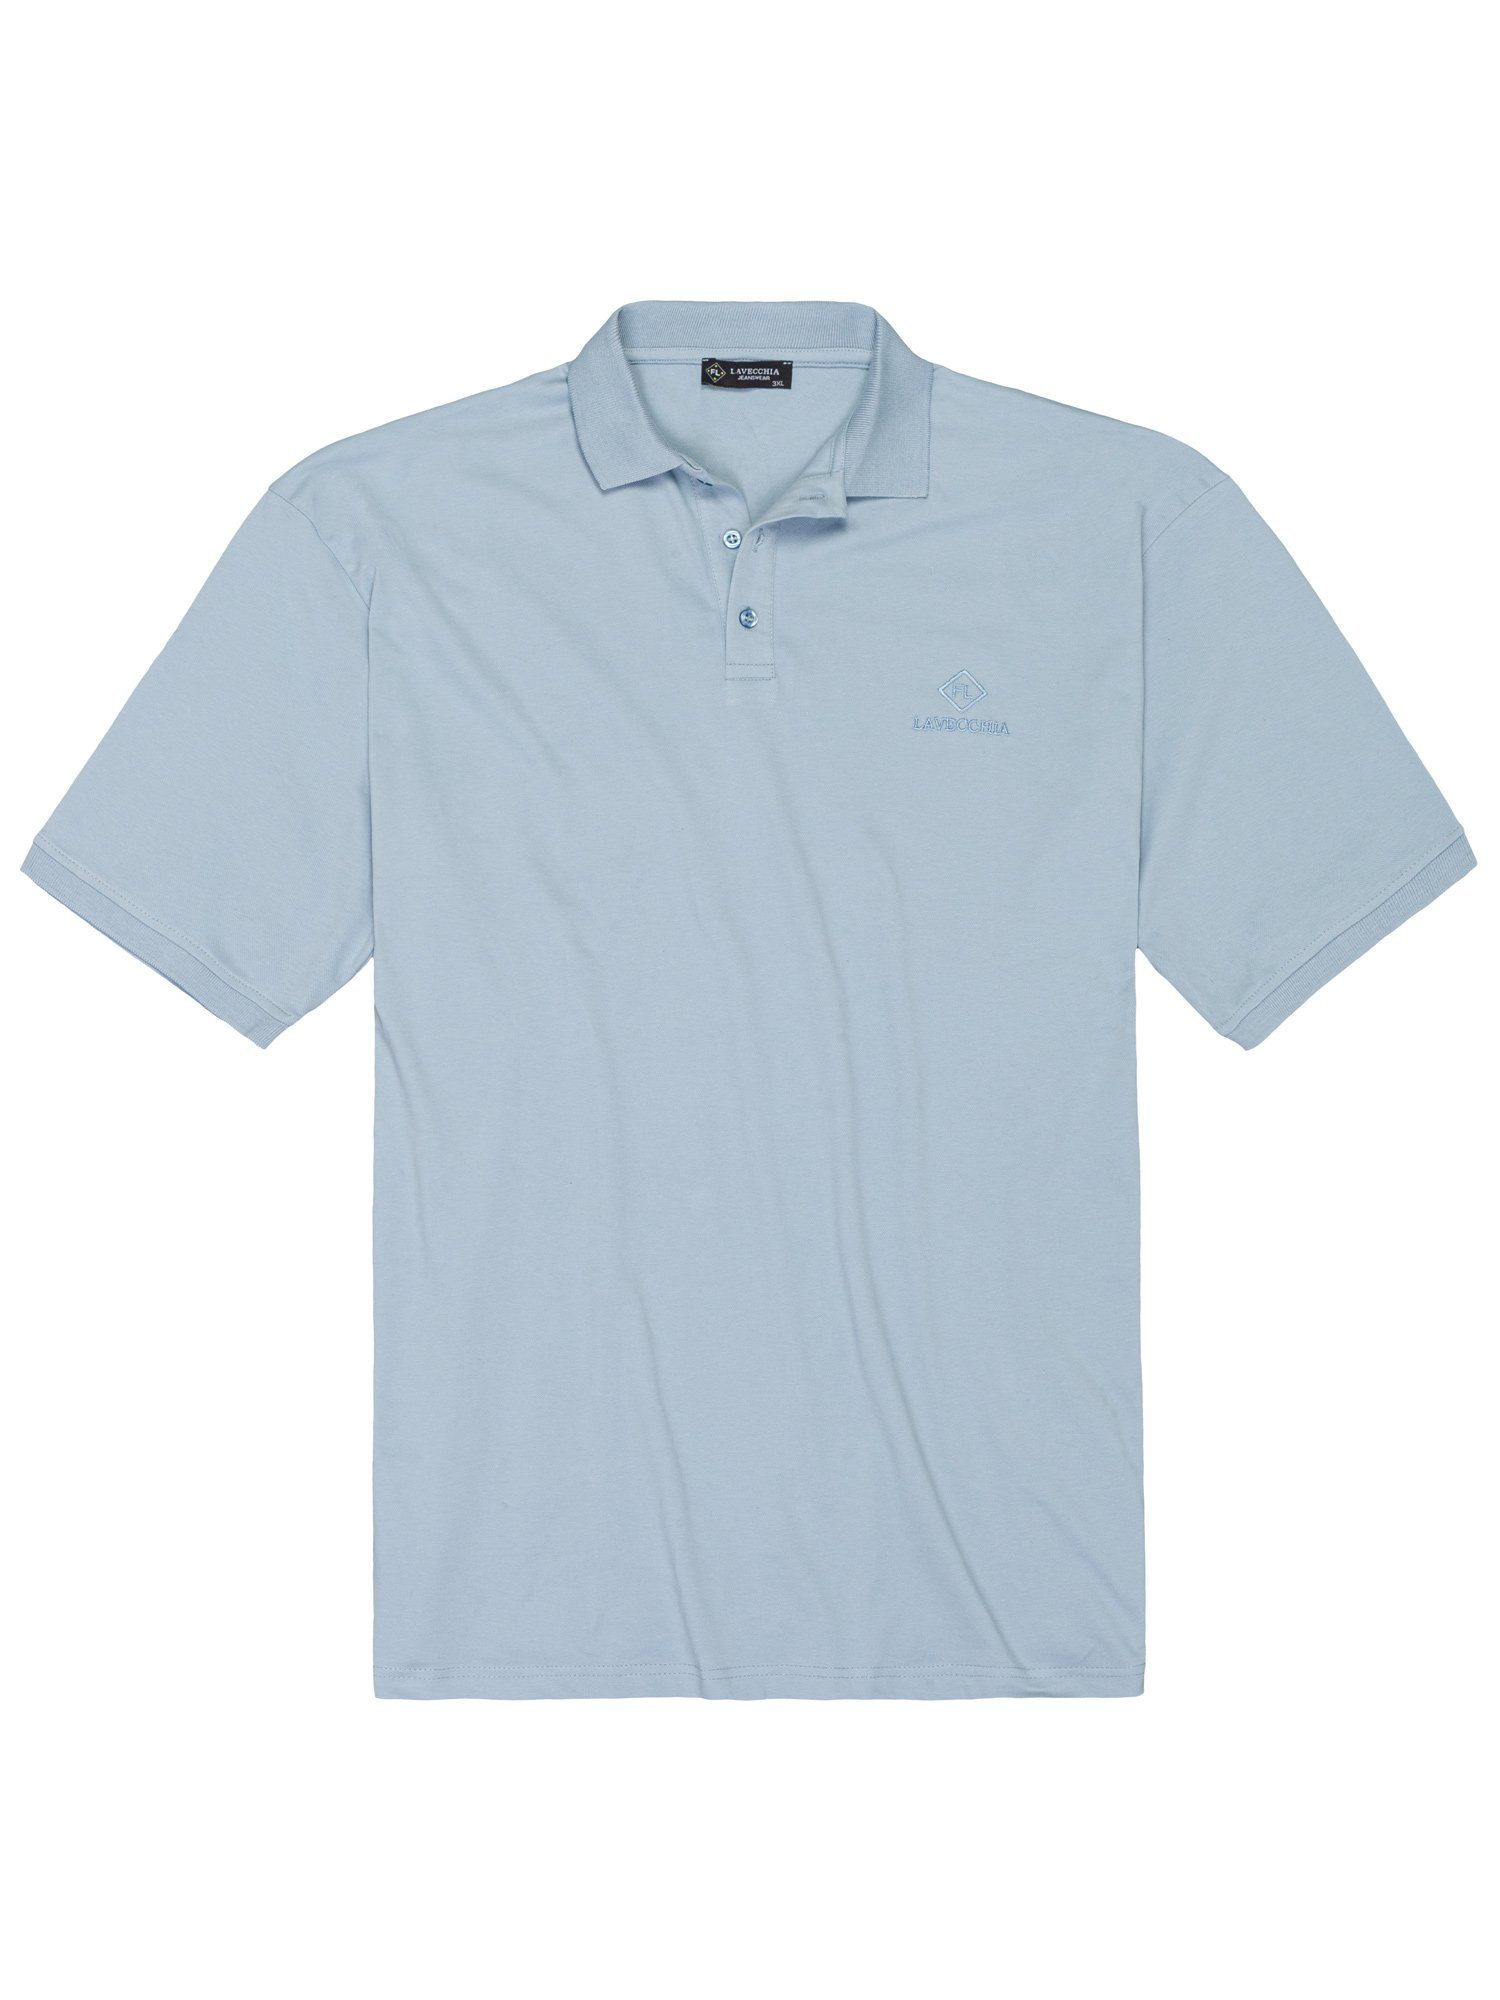 Lavecchia Poloshirt Übergrößen LV-1000 Herren Polo Shirt hellblau